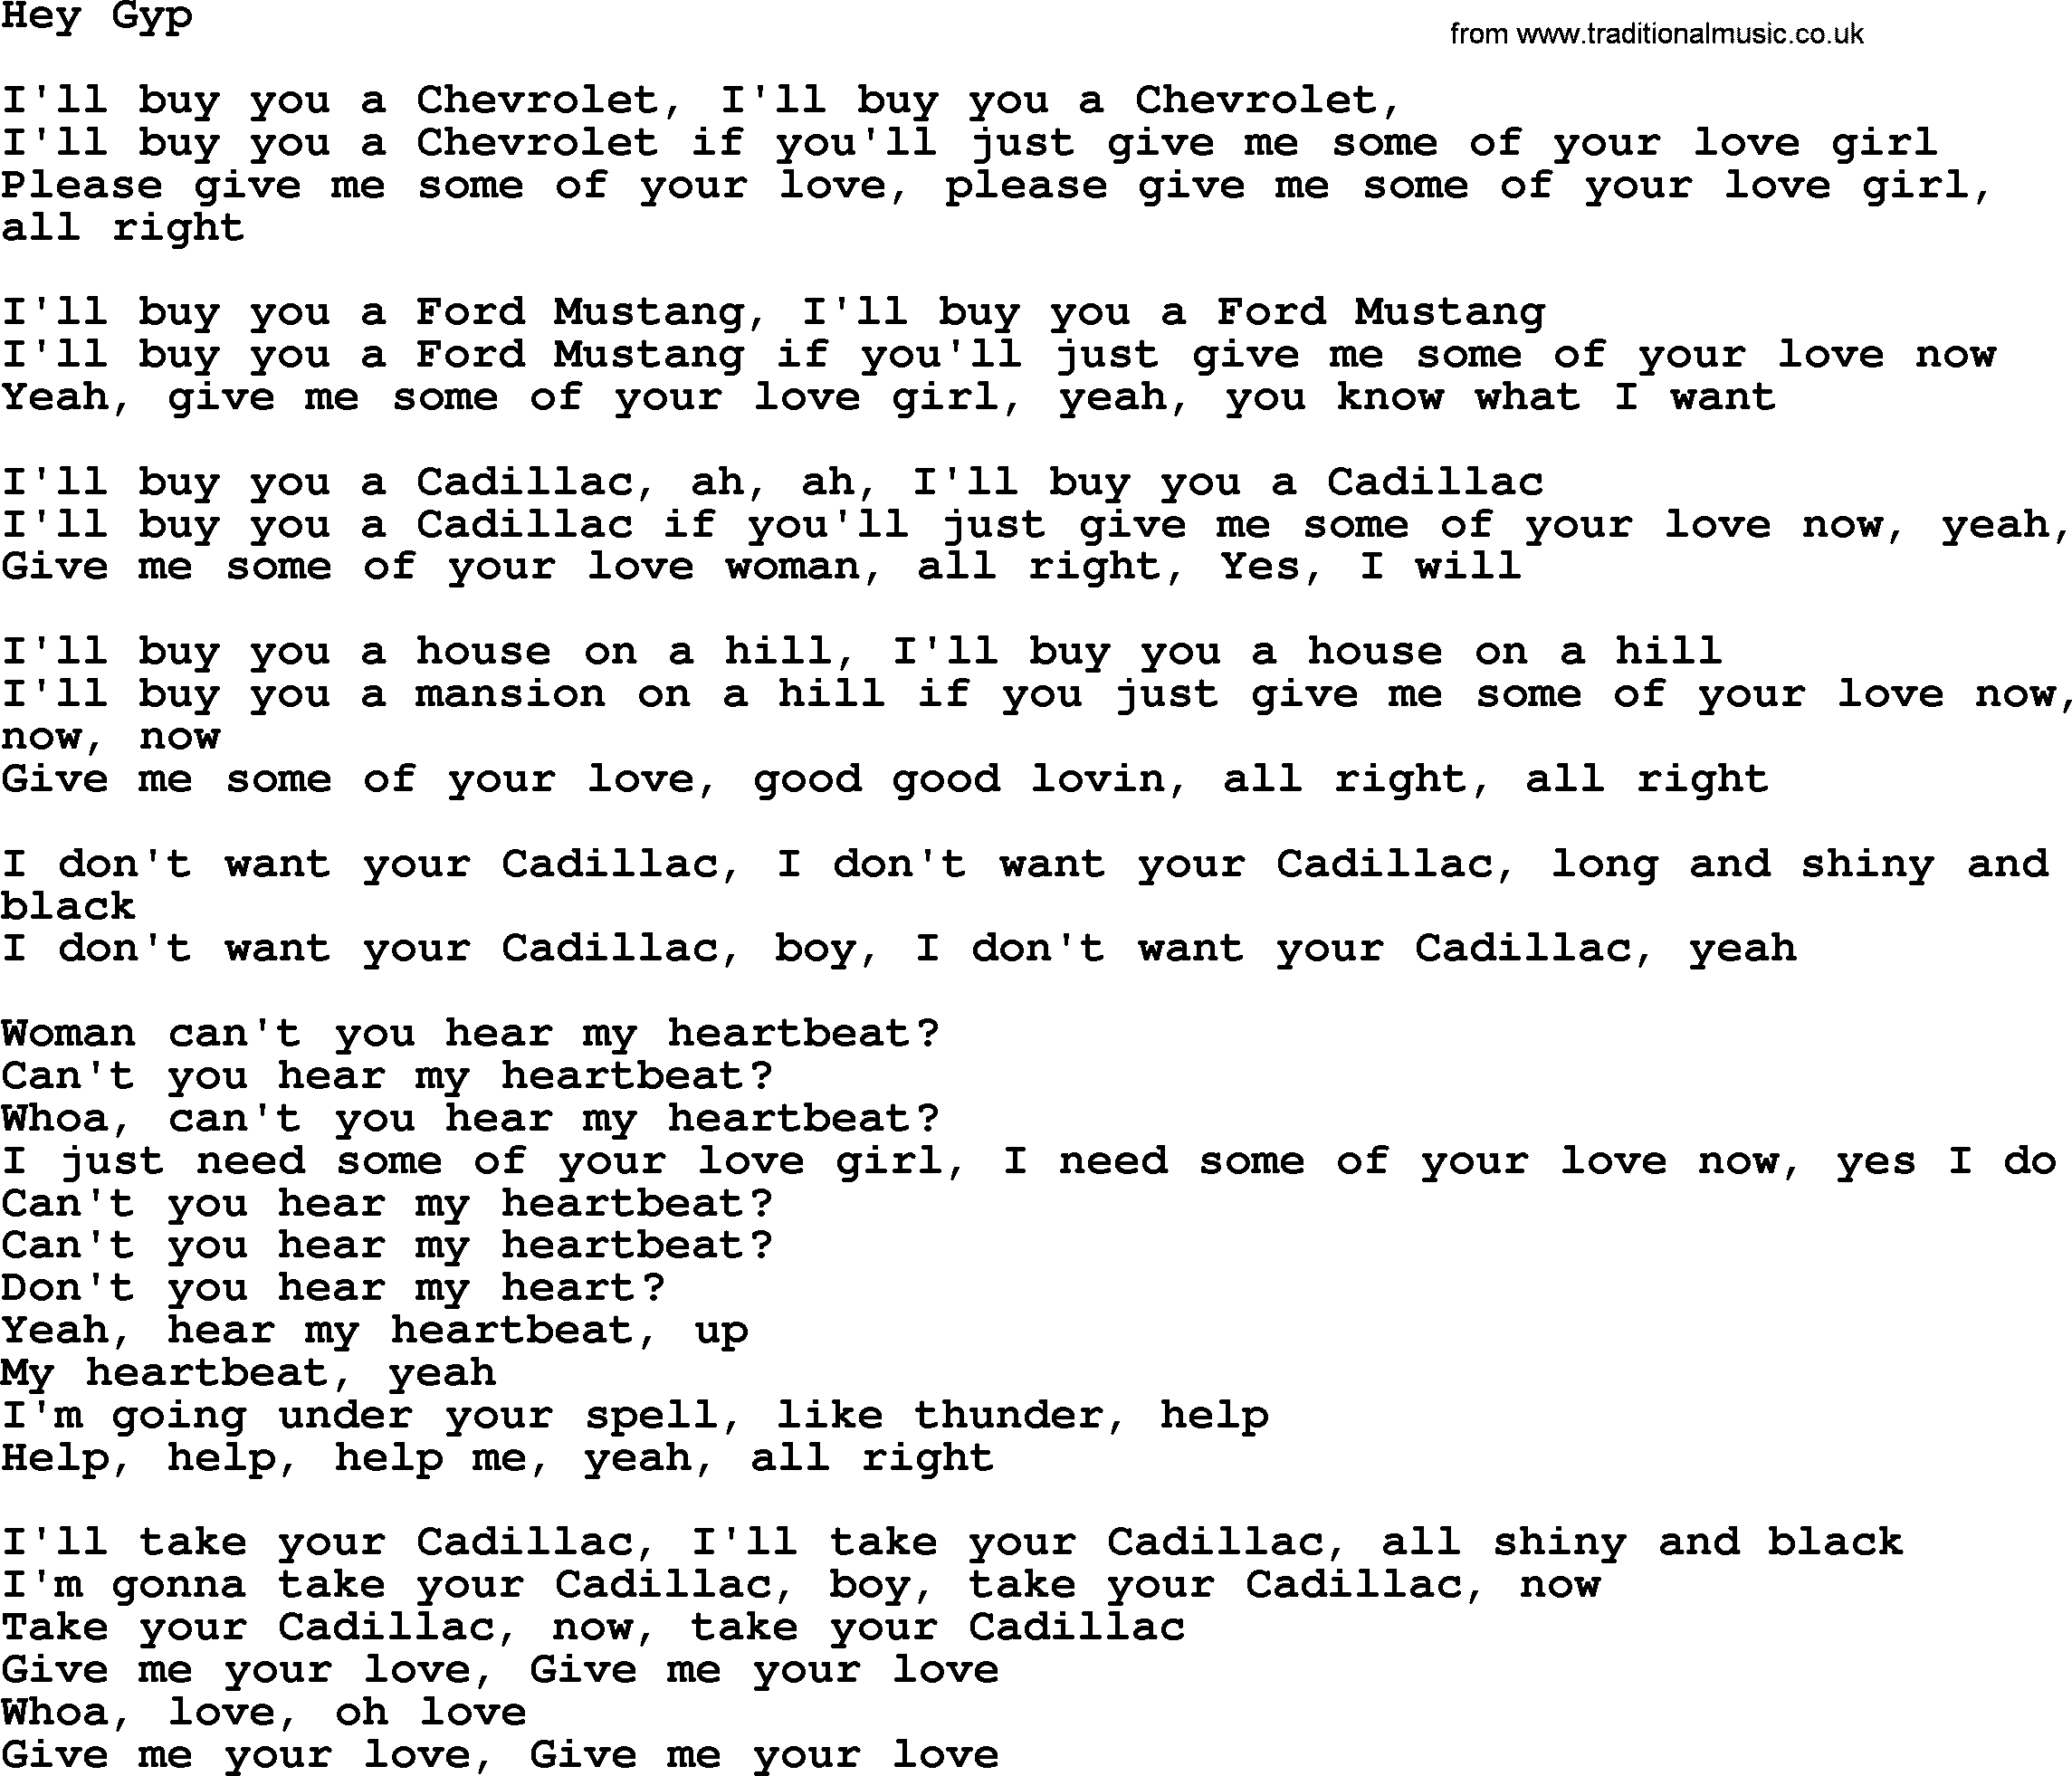 The Byrds song Hey Gyp, lyrics